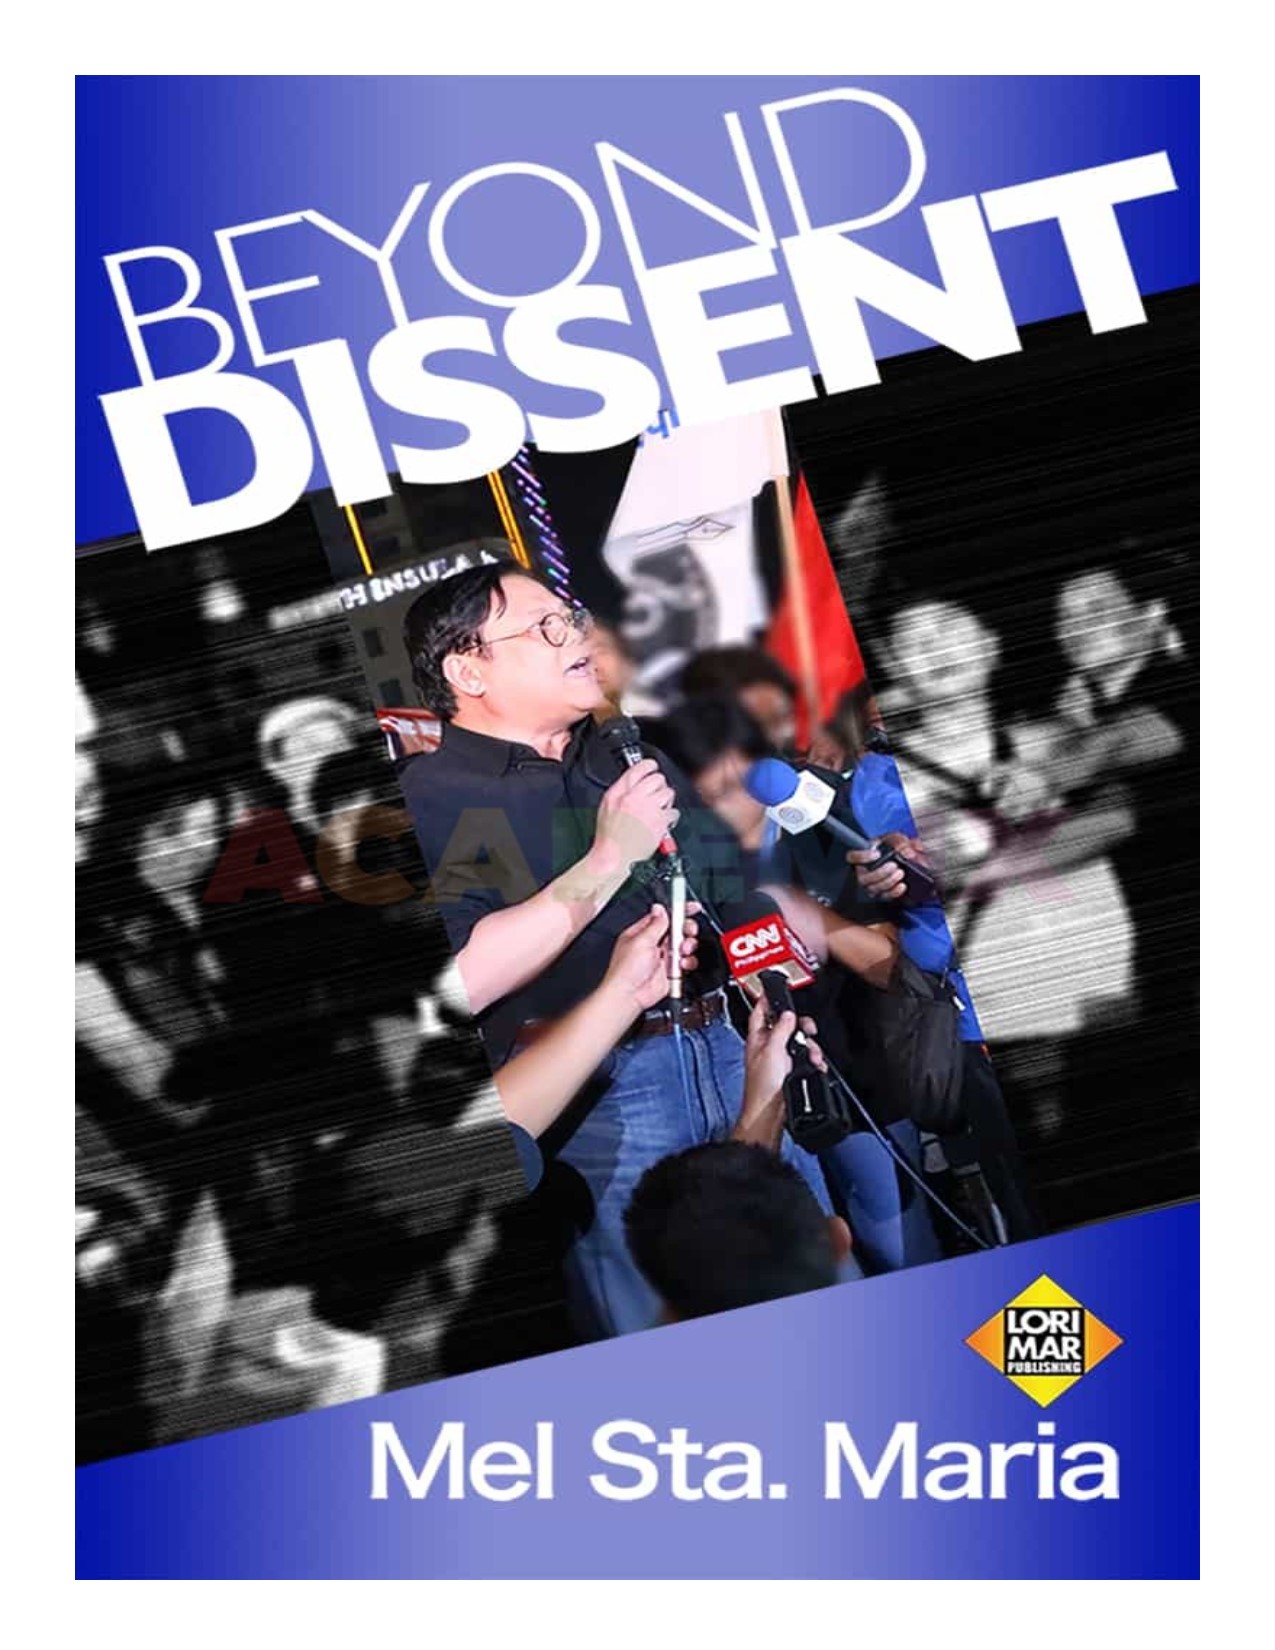 Beyond dissent